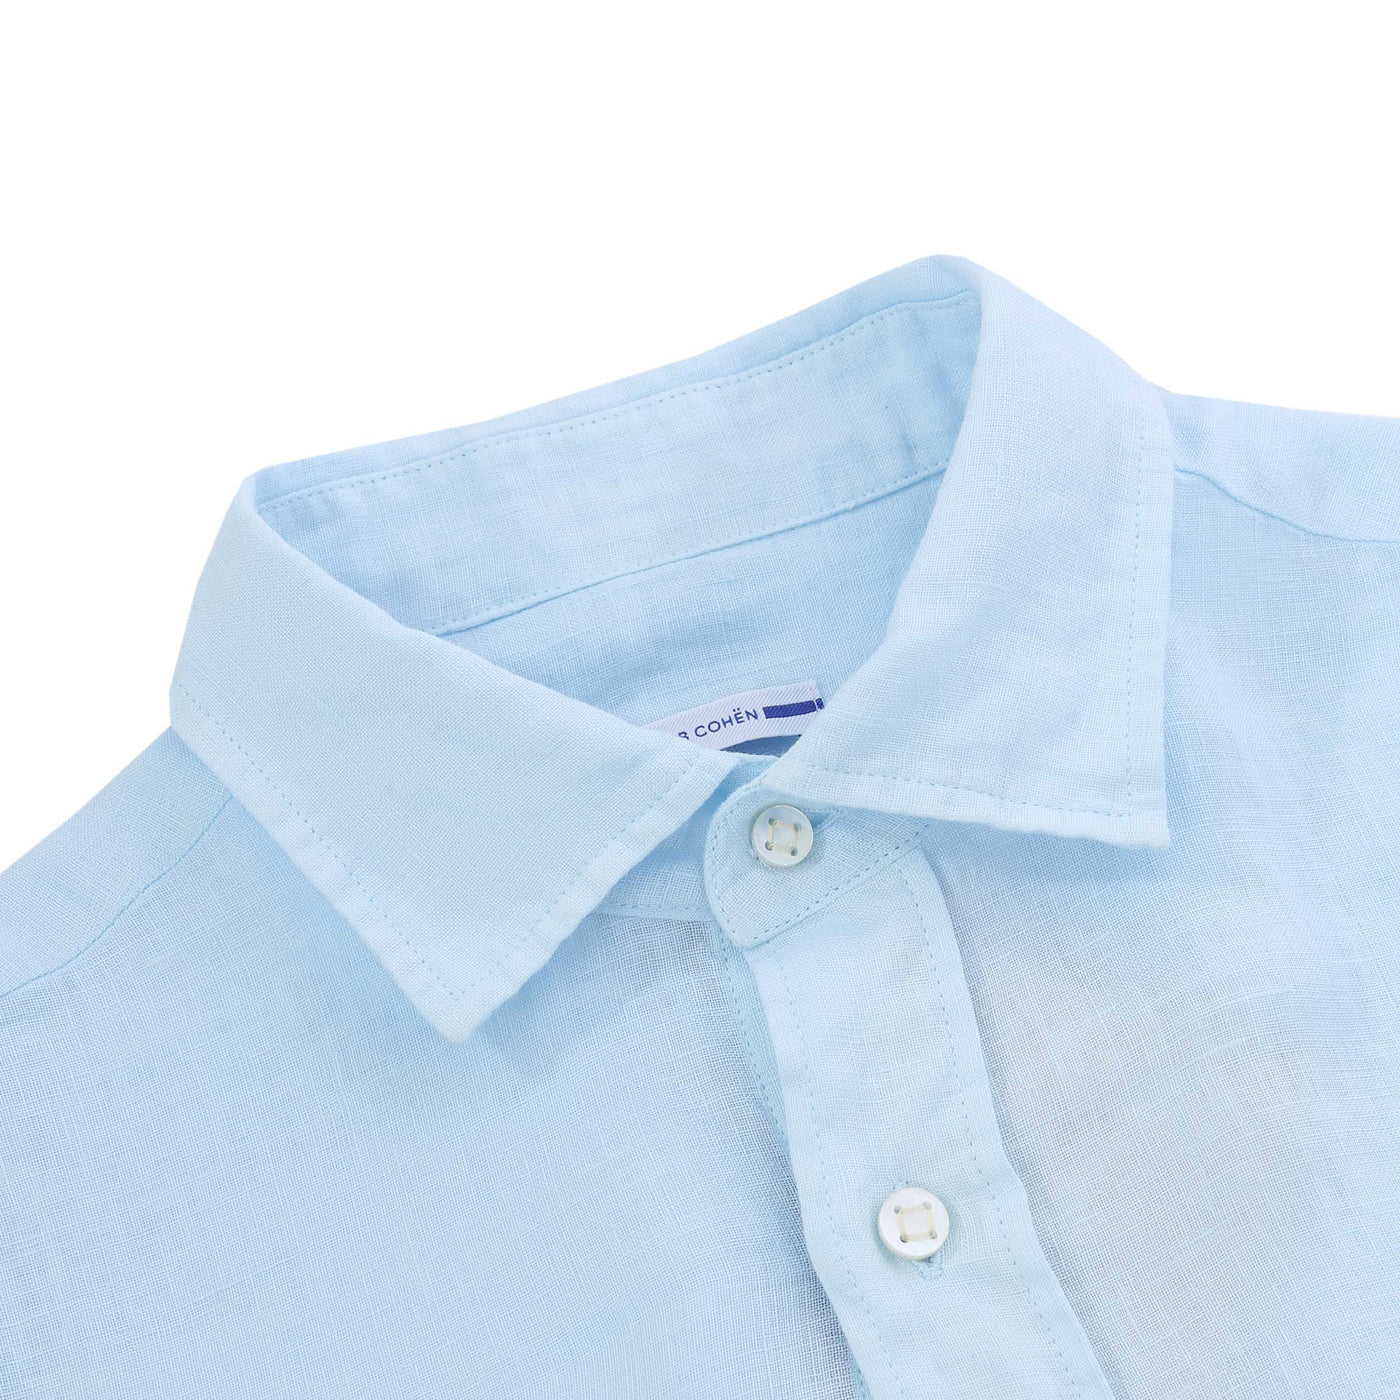 Jacob Cohen Basic Linen Shirt in Sky Blue Collar